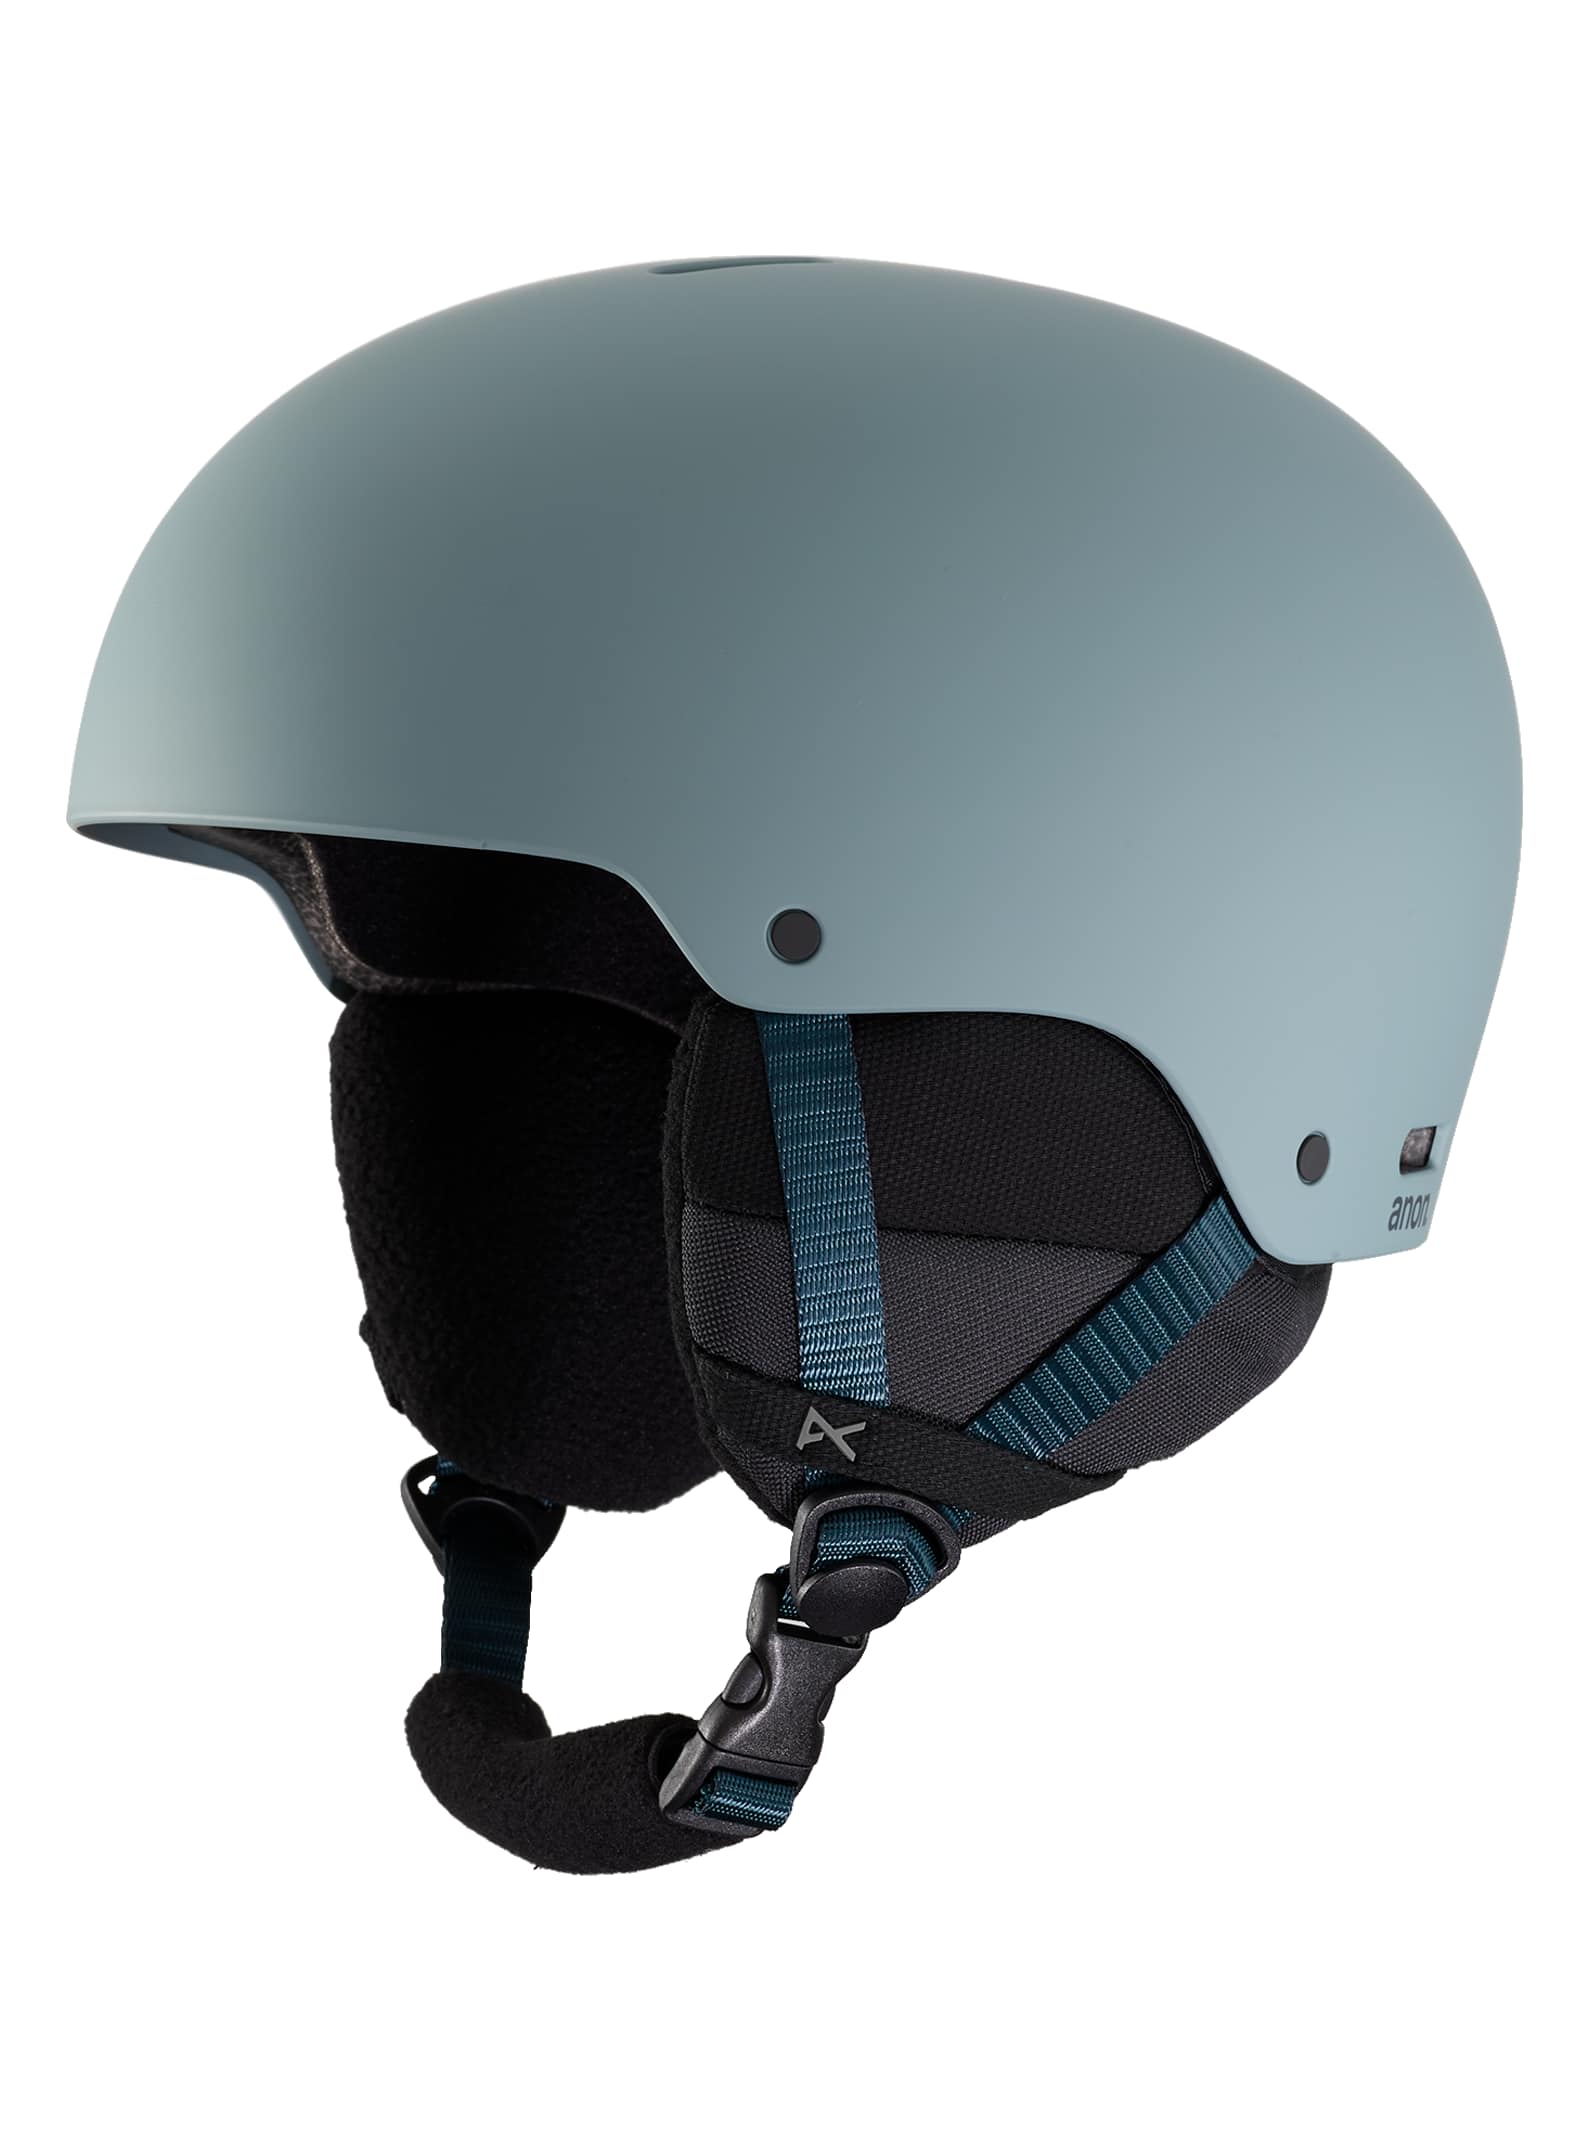 Burton Snowboard Helmet Size Chart